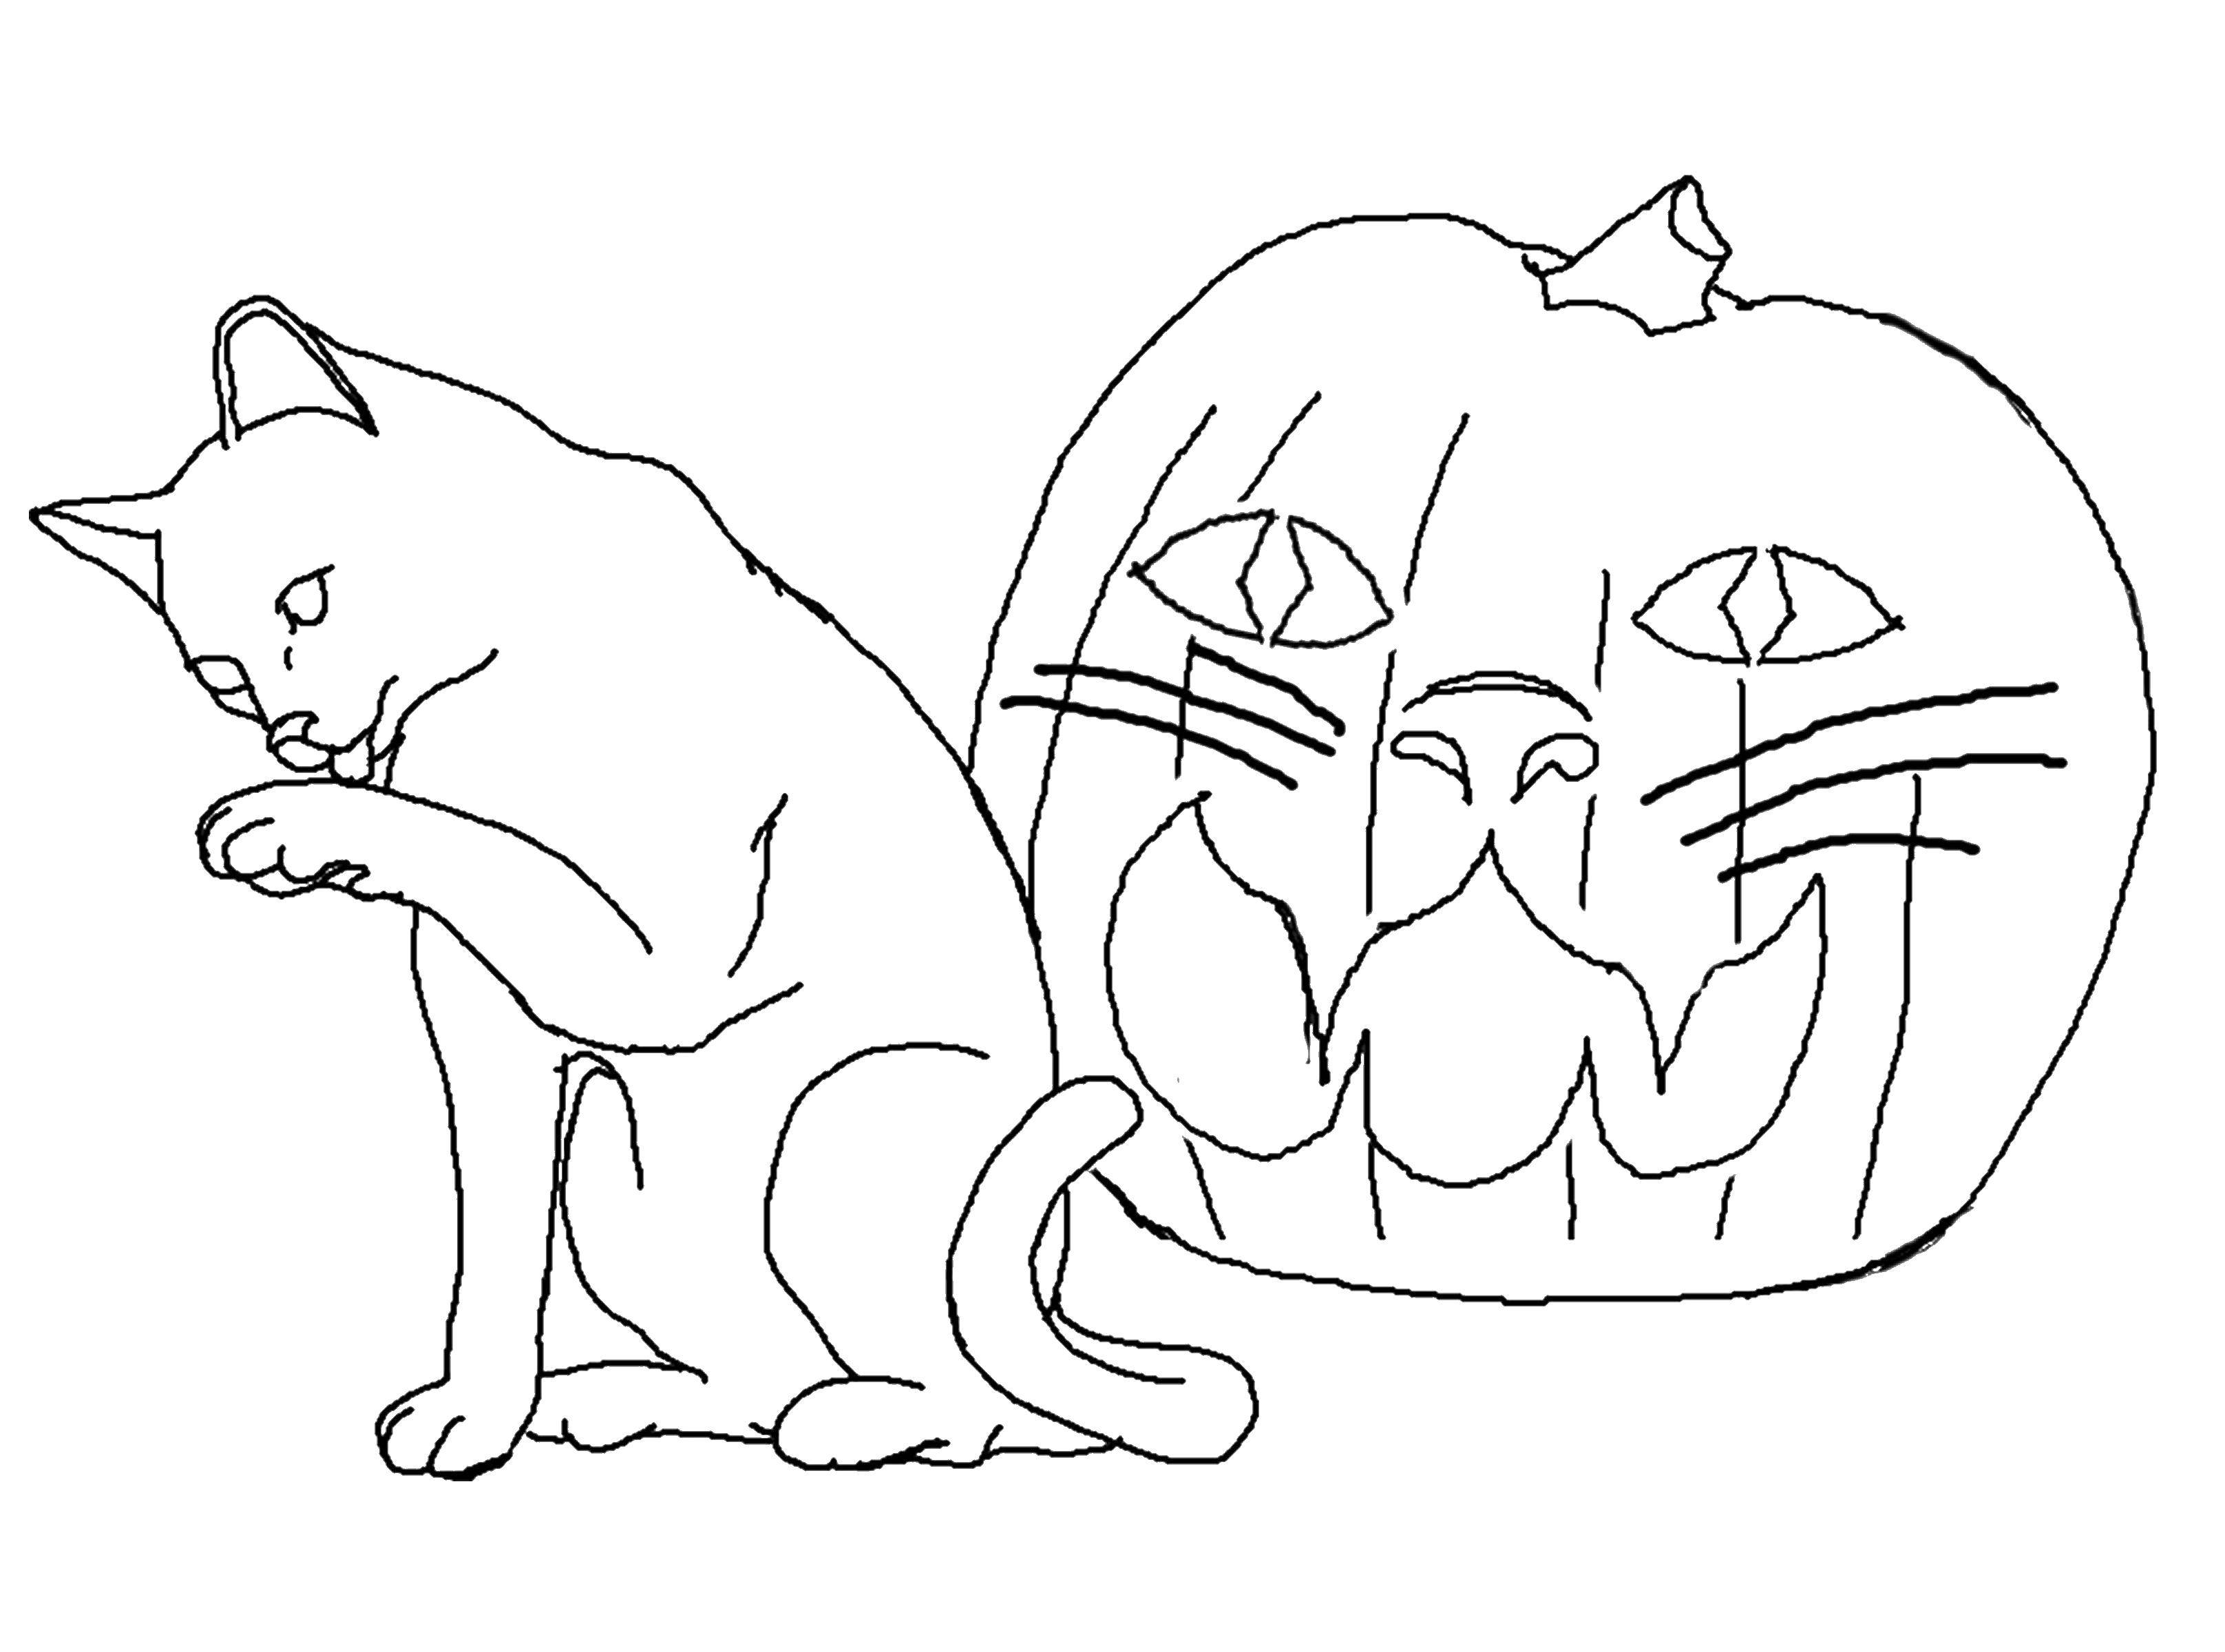 Coloring Cat and pumpkin. Category Animals. Tags:  animals, kitten, cat, pumpkin.